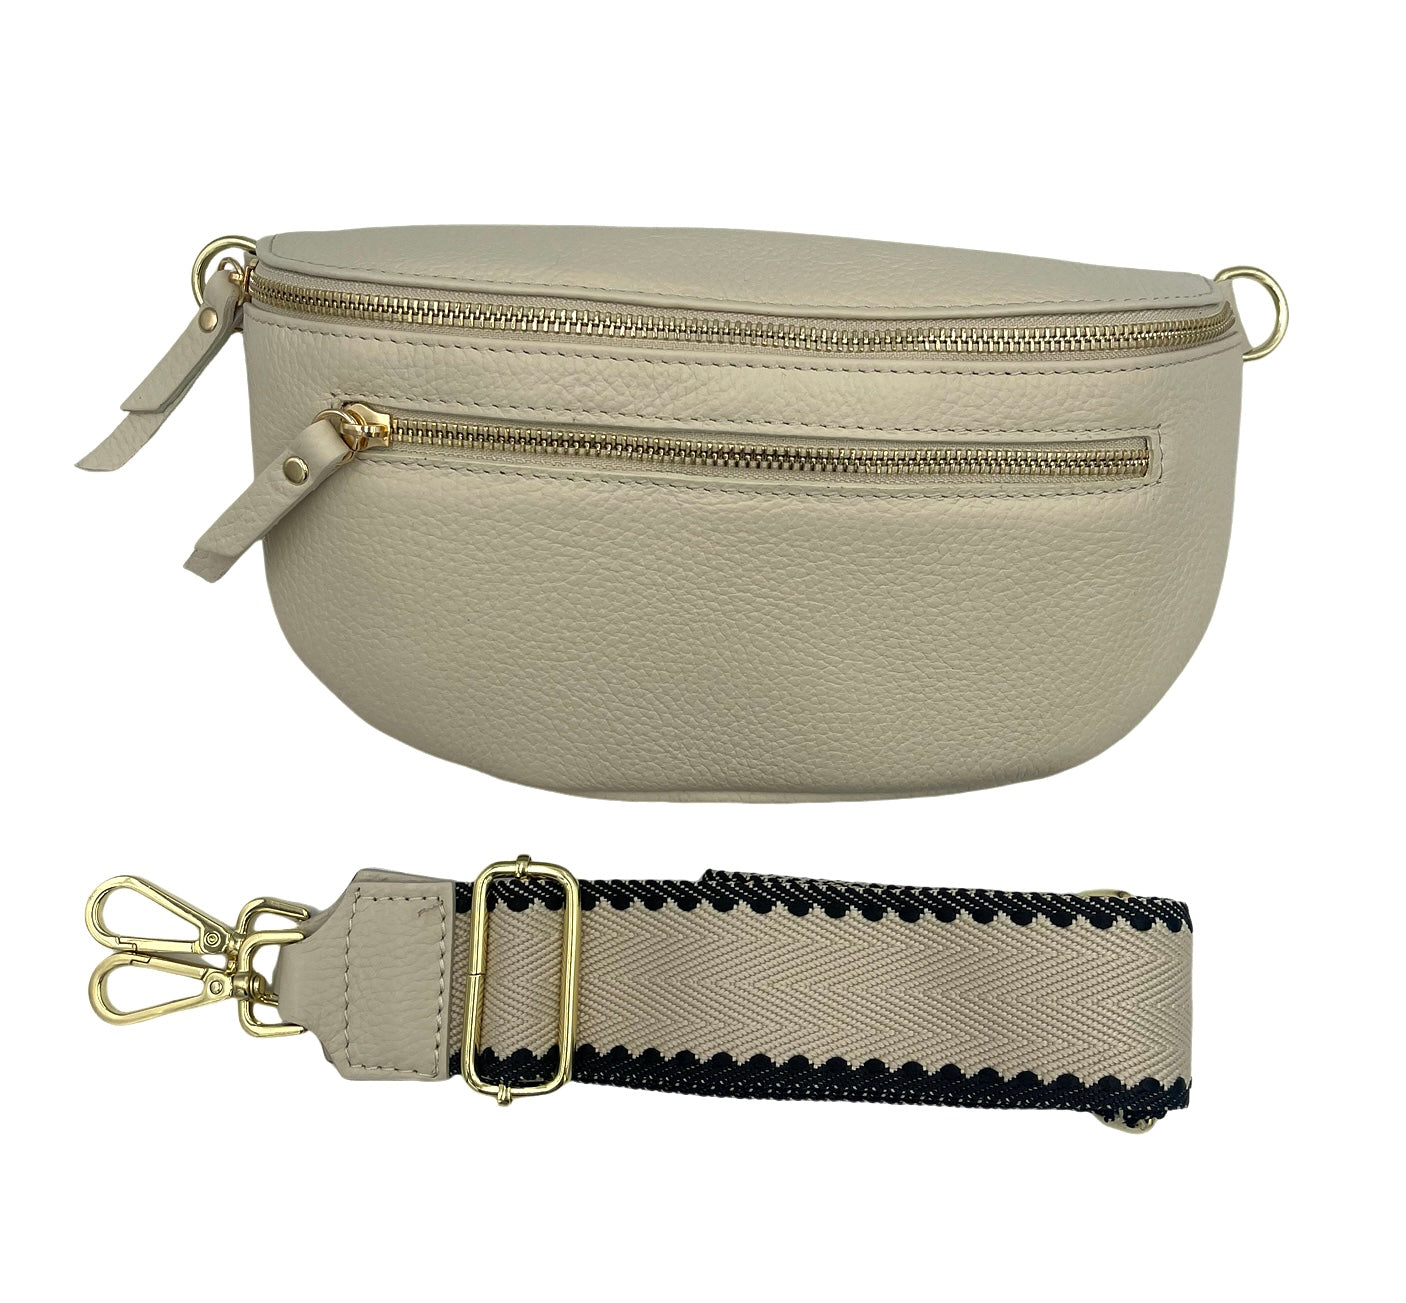 Sling Bag - cream double zipper with cream/blk strap